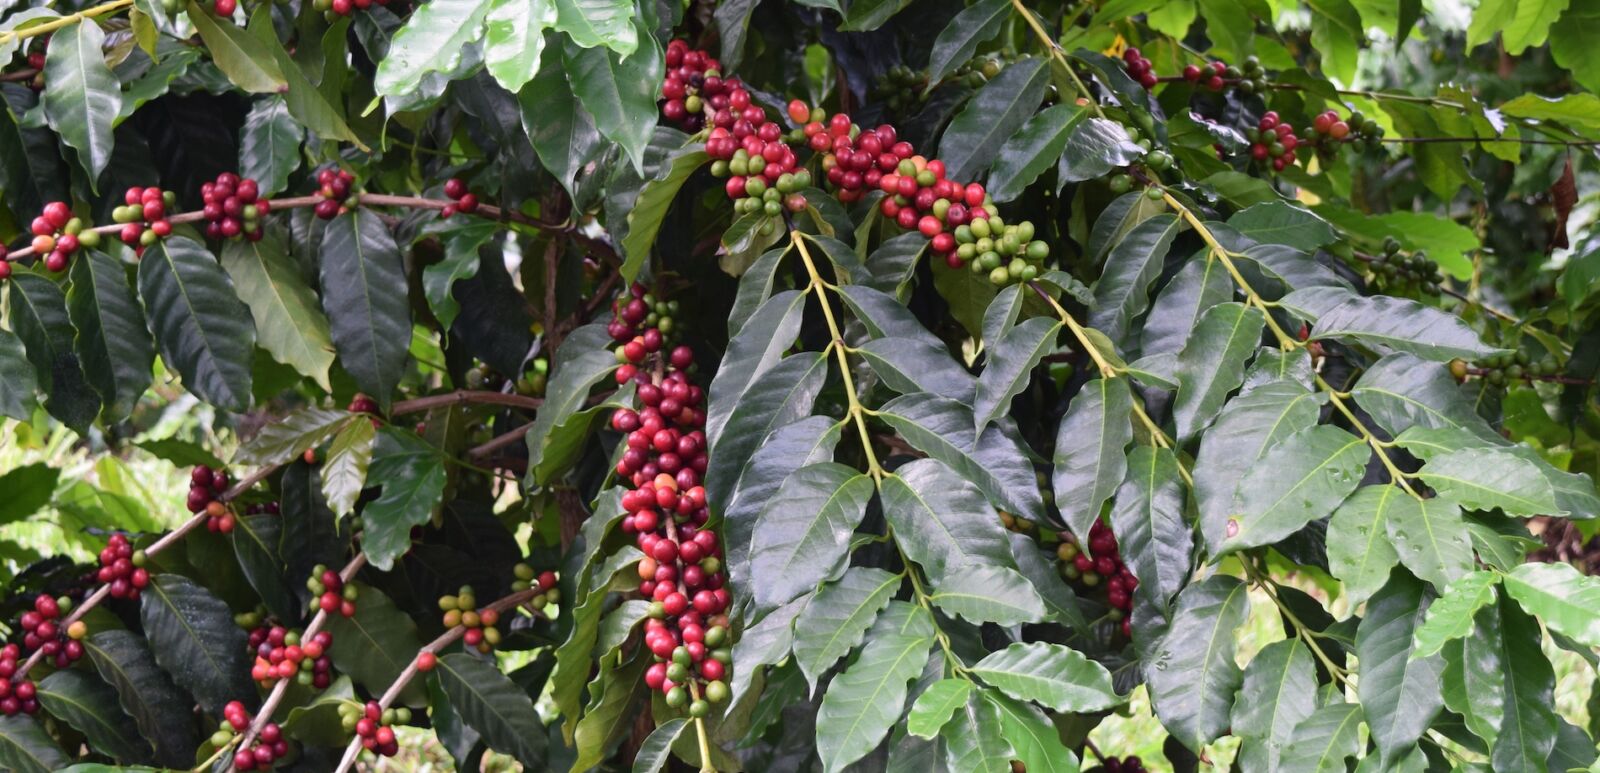 Coffee beans on trees. Photo via Kona Coffee Cultural Festival.